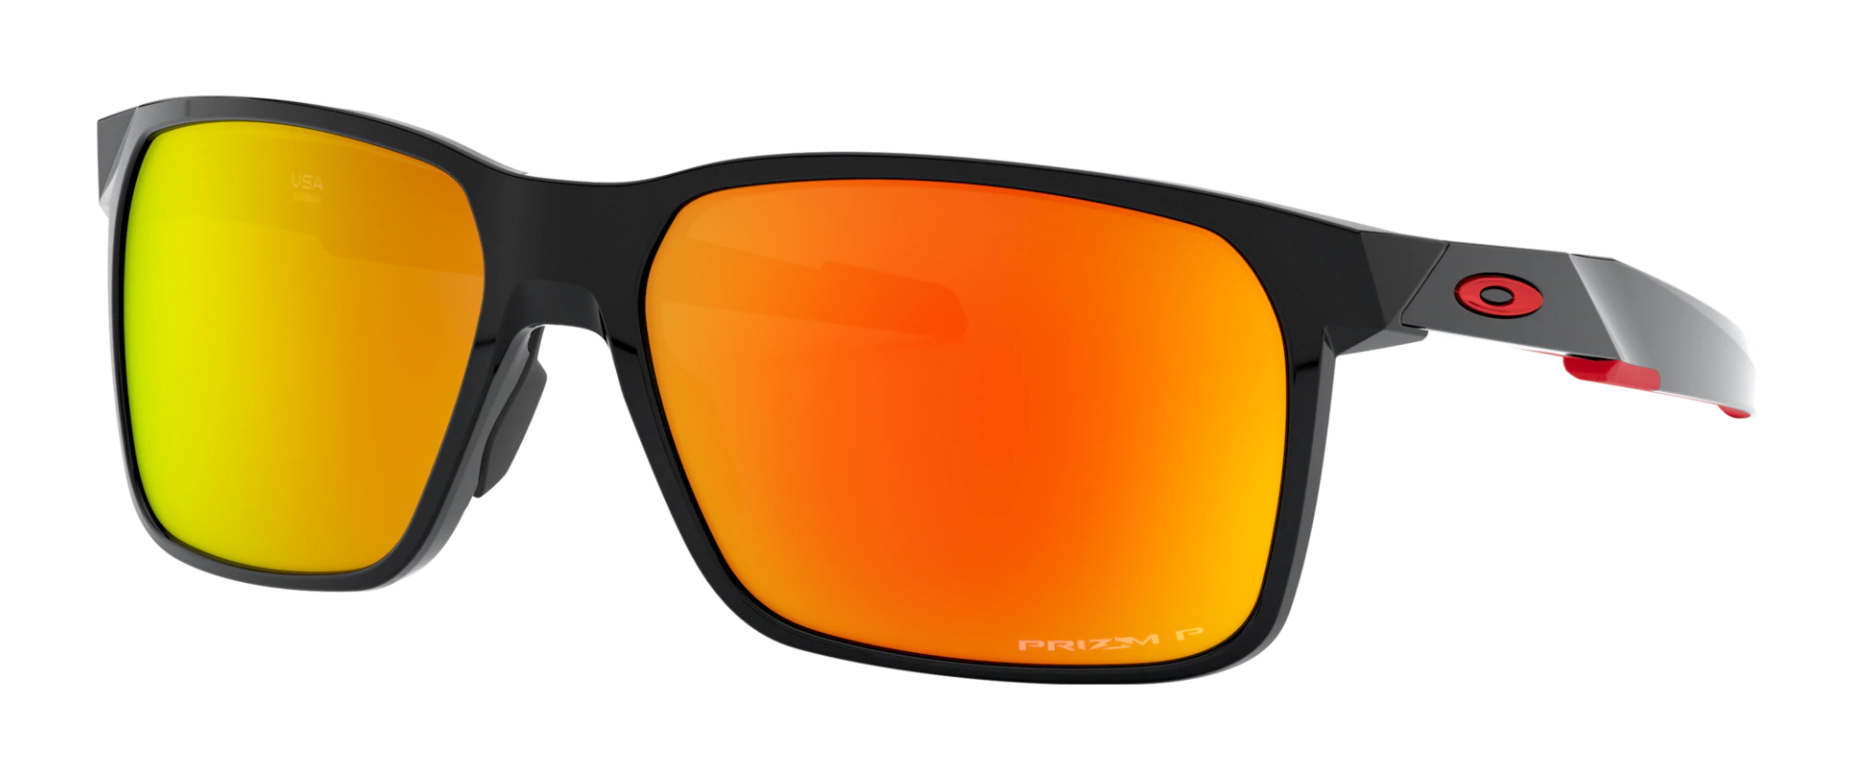 Best Oakley Men's Sunglasses of 2021